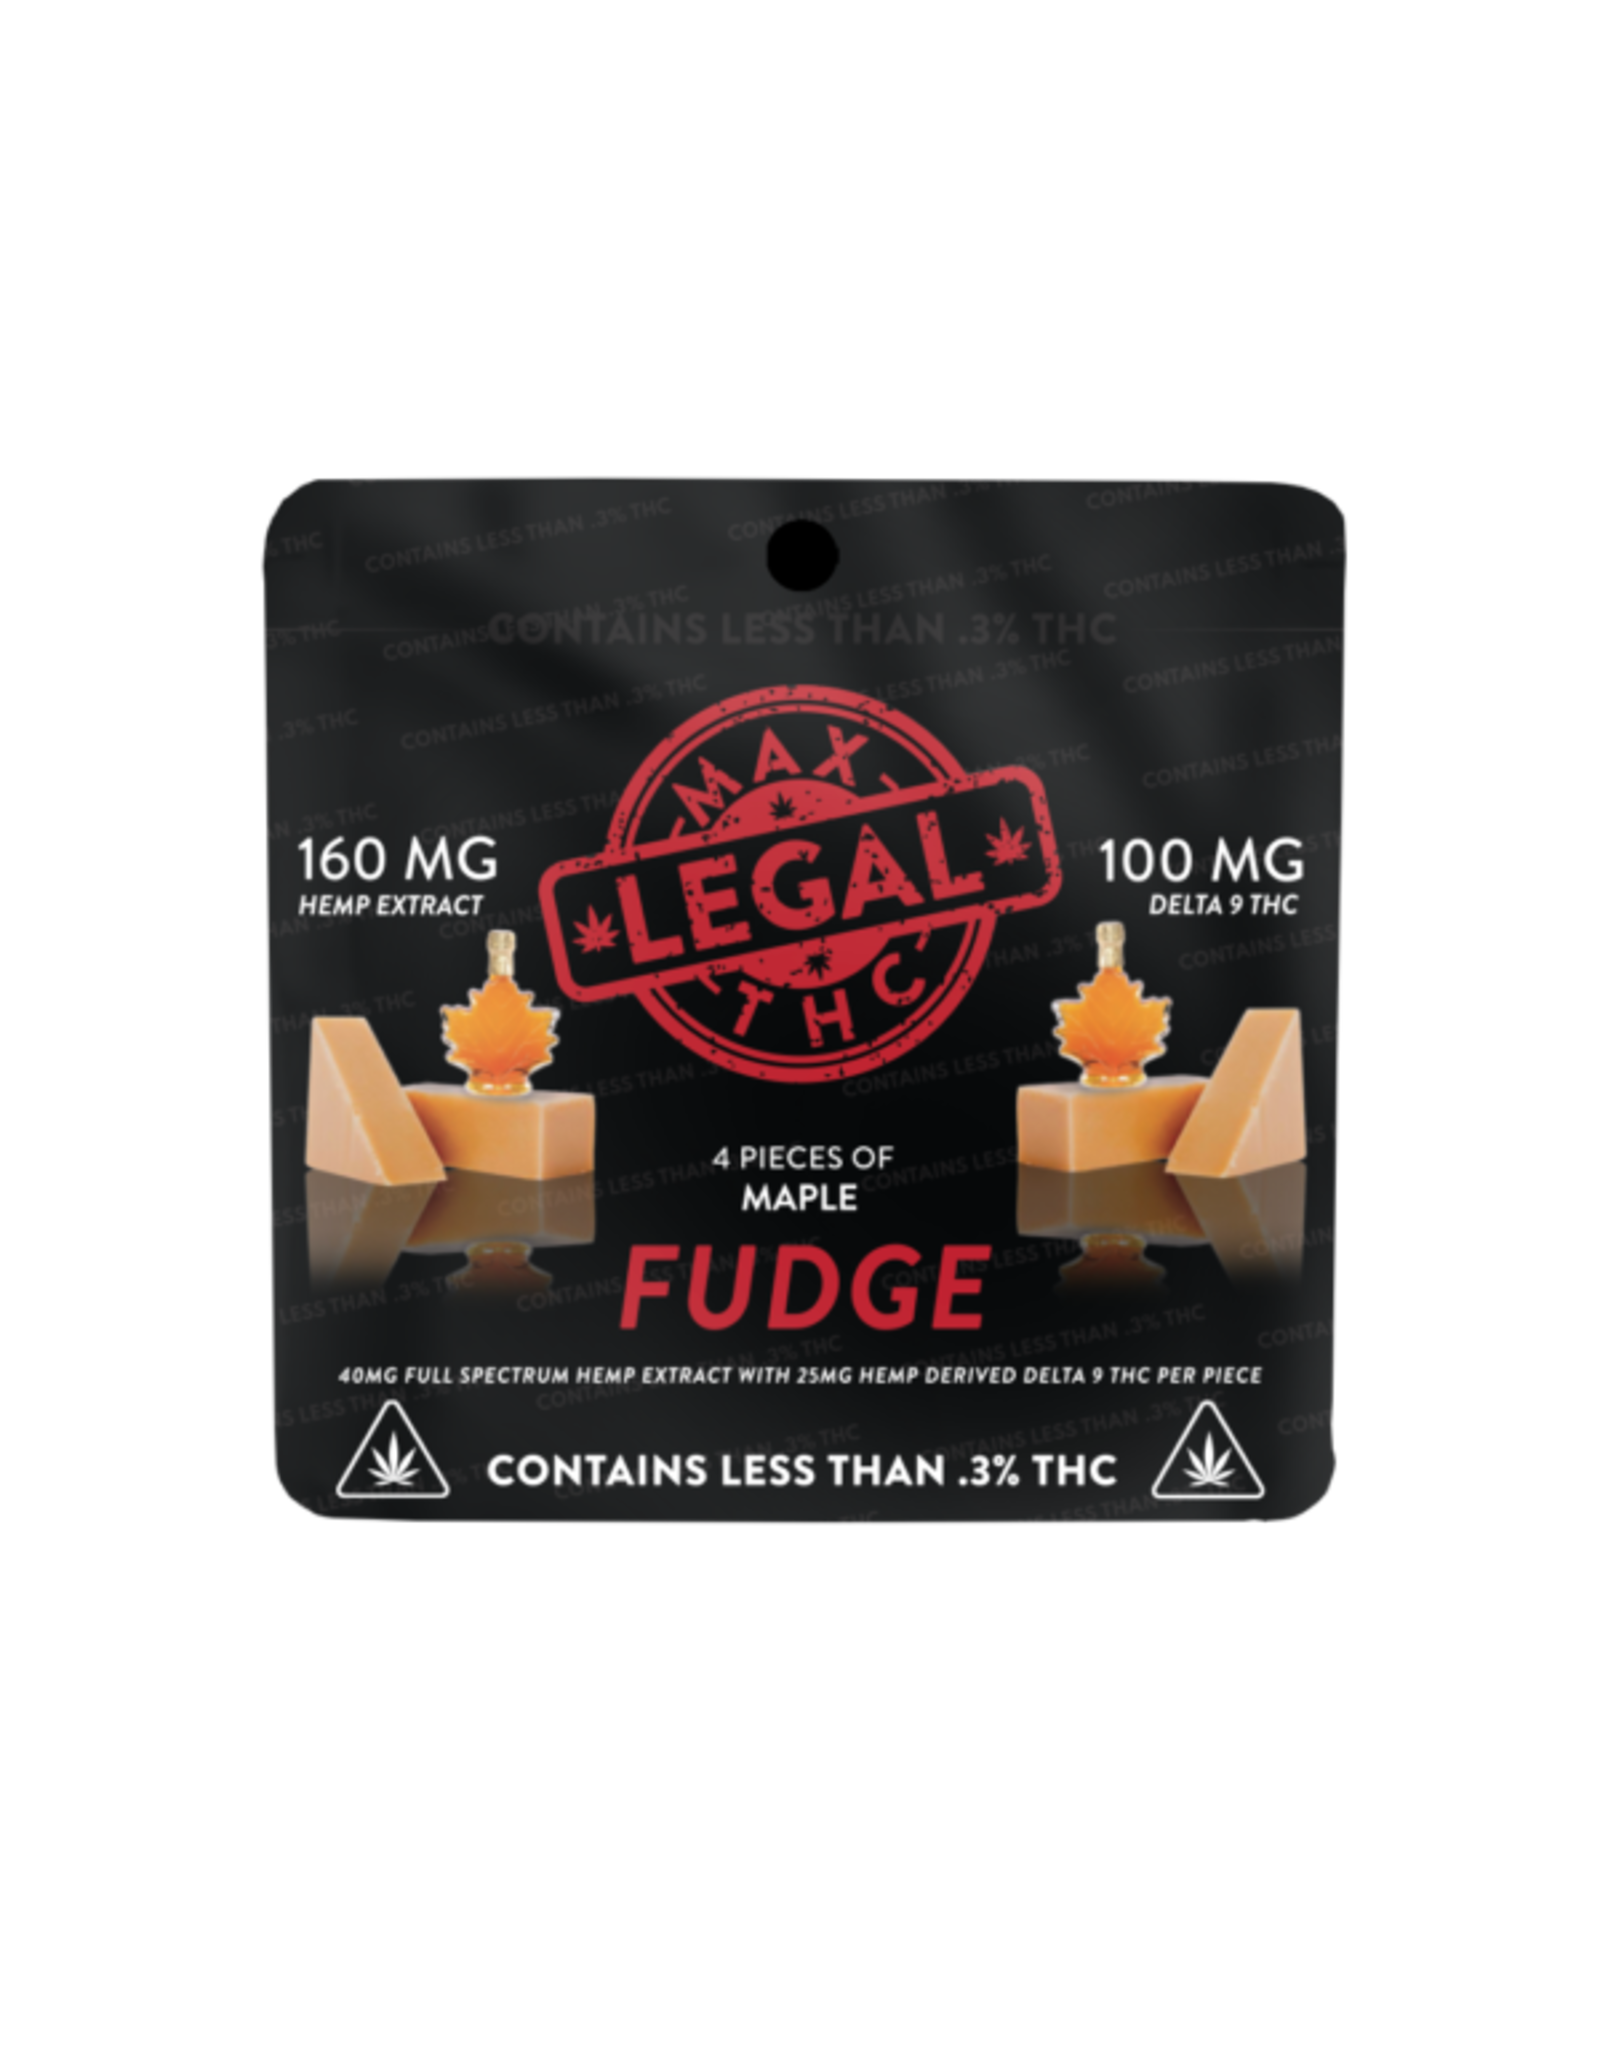 Max Legal THC Maple Fudge - Hemp Derived Delta 9 THC